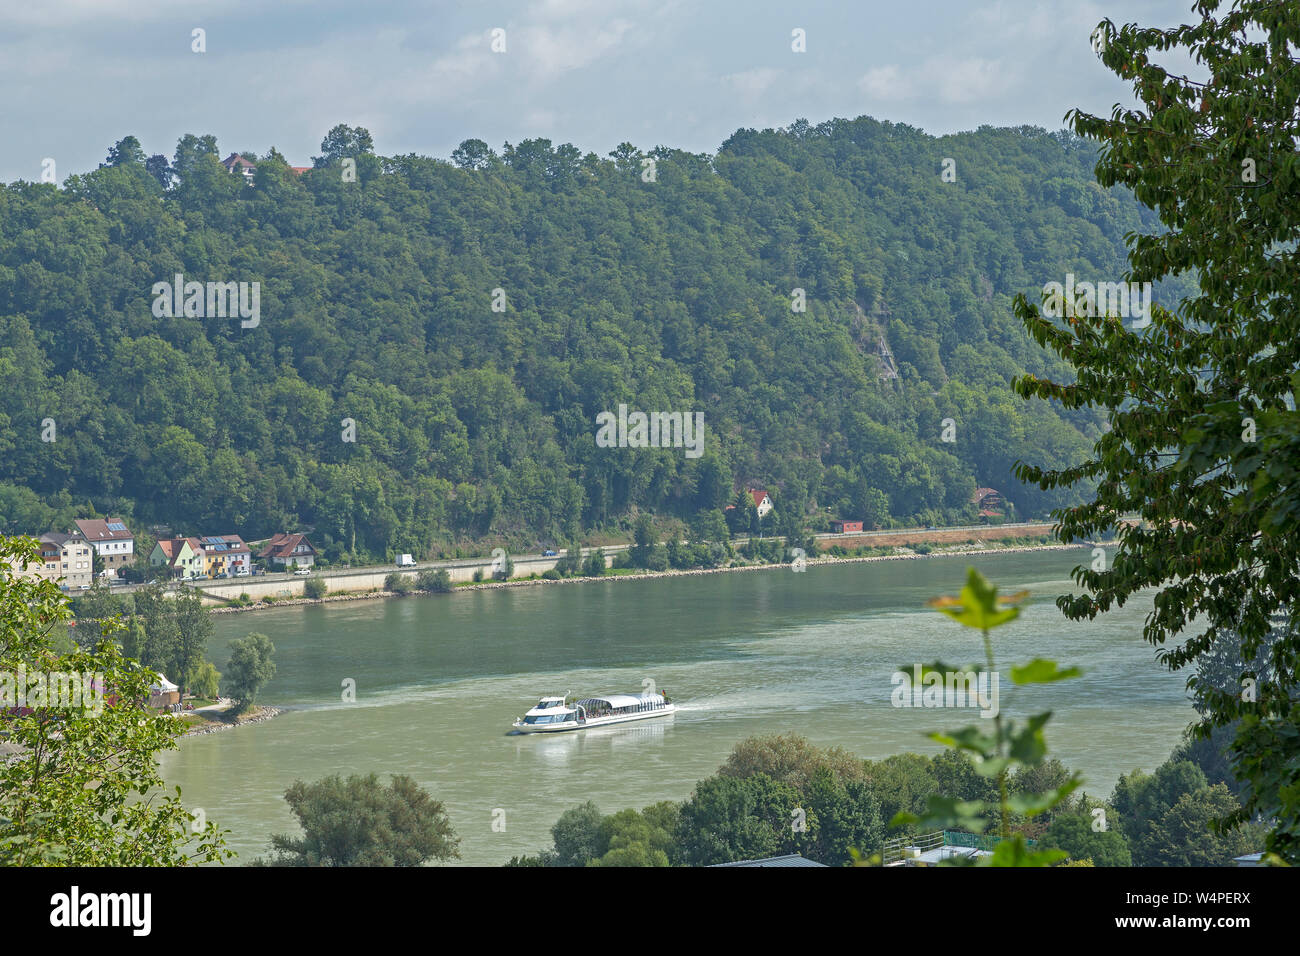 Dreiflüsseeck (three rivers corner), junction of Ilz, Danube and Inn, Passau, Lower Bavaria, Germany Stock Photo